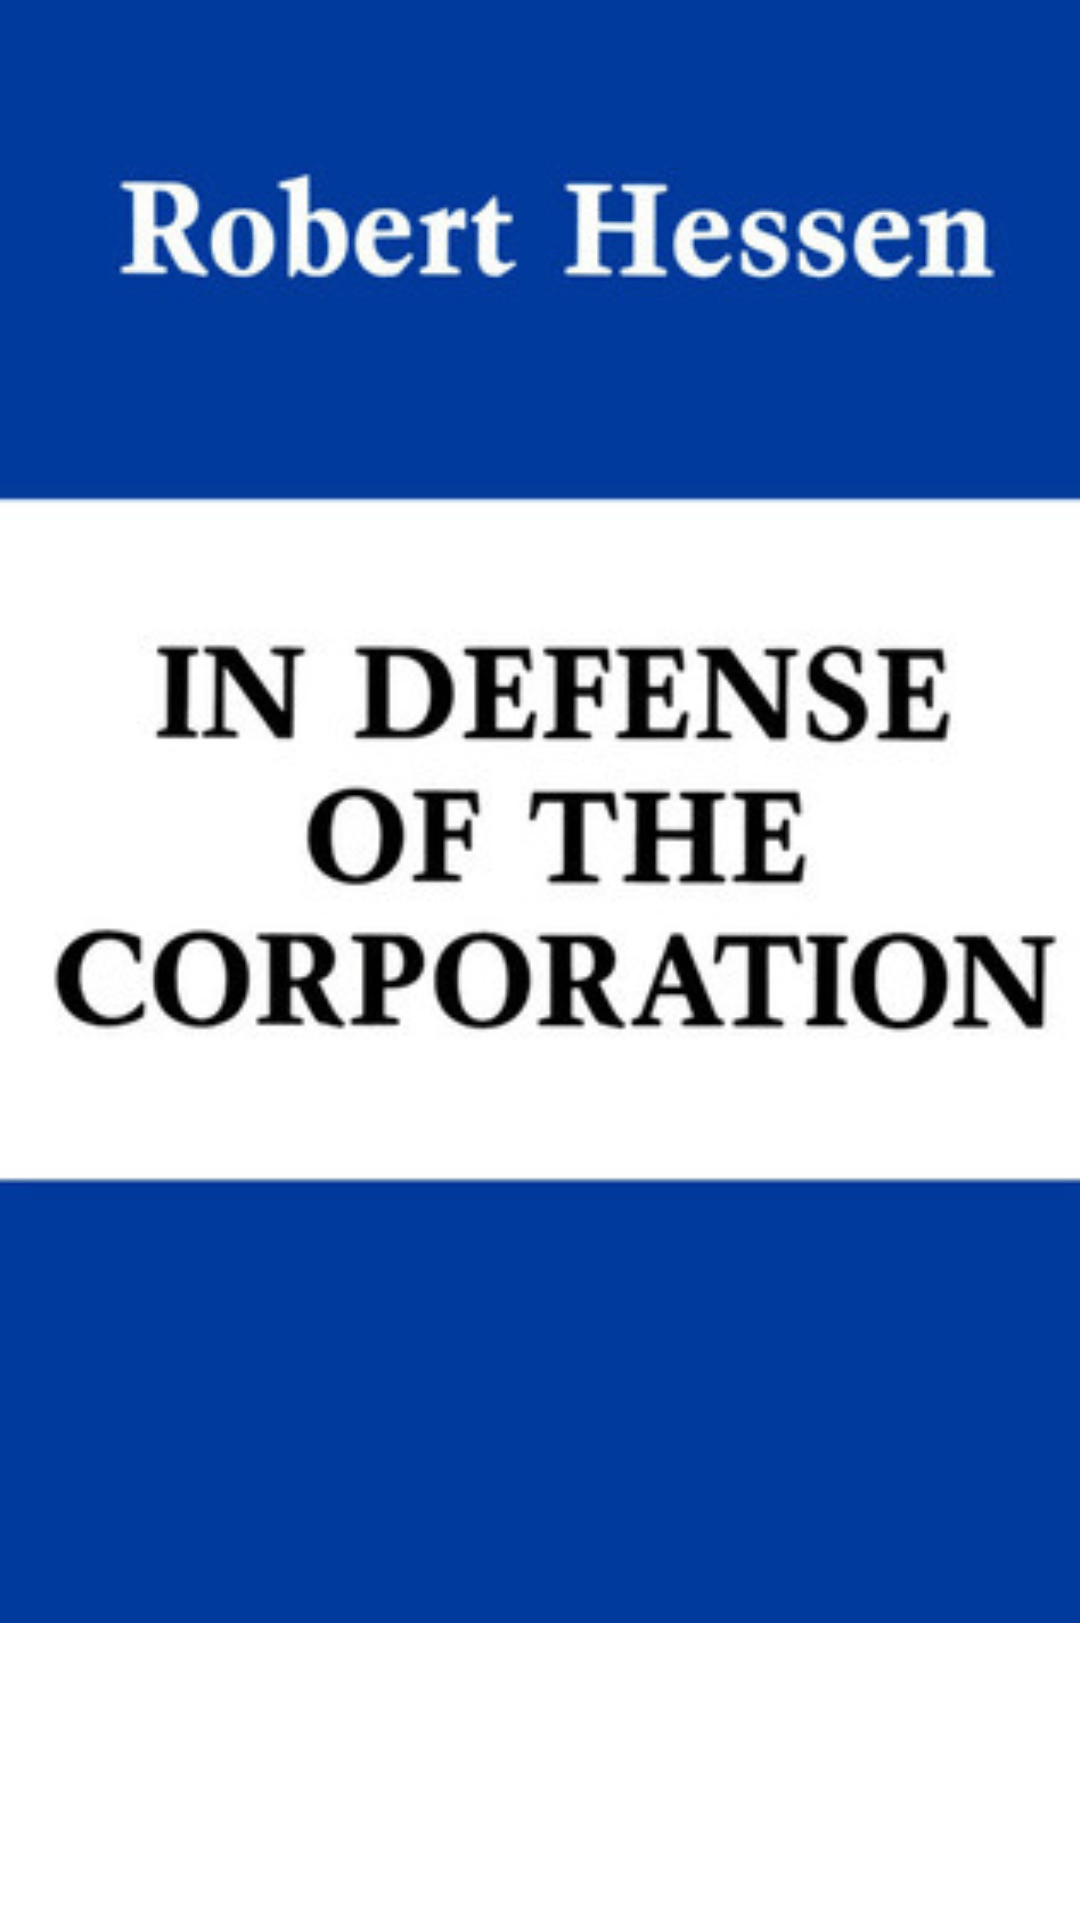 In Defense of the Corporation by Robert Hessen